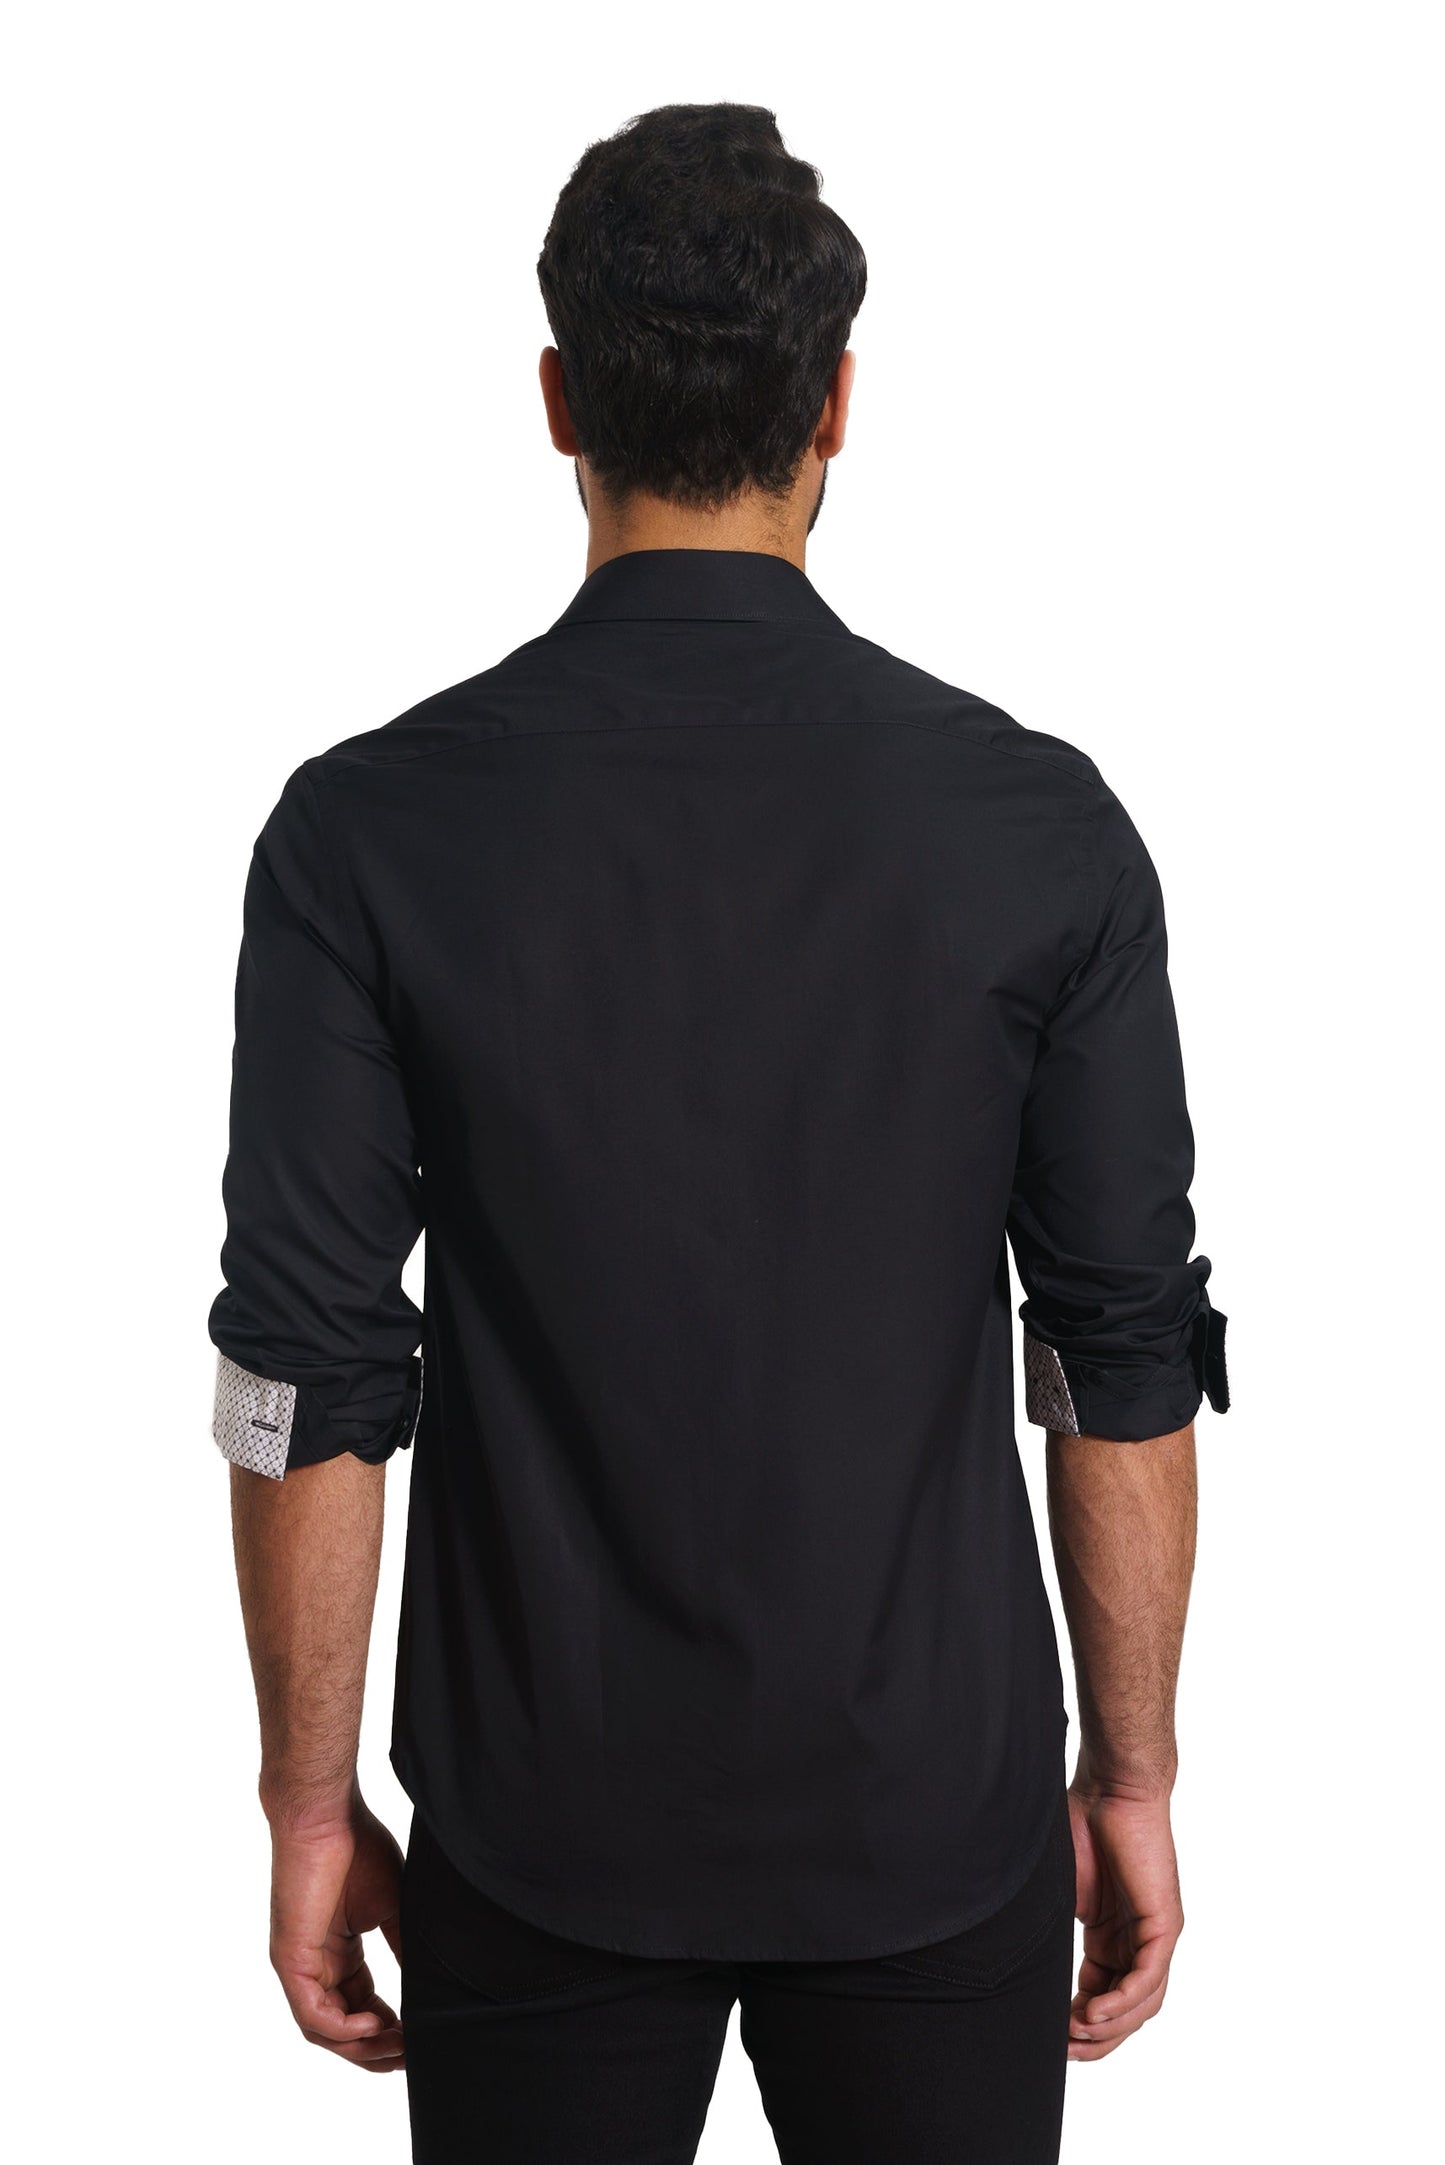 Black Long Sleeve Shirt TP-7145 Back